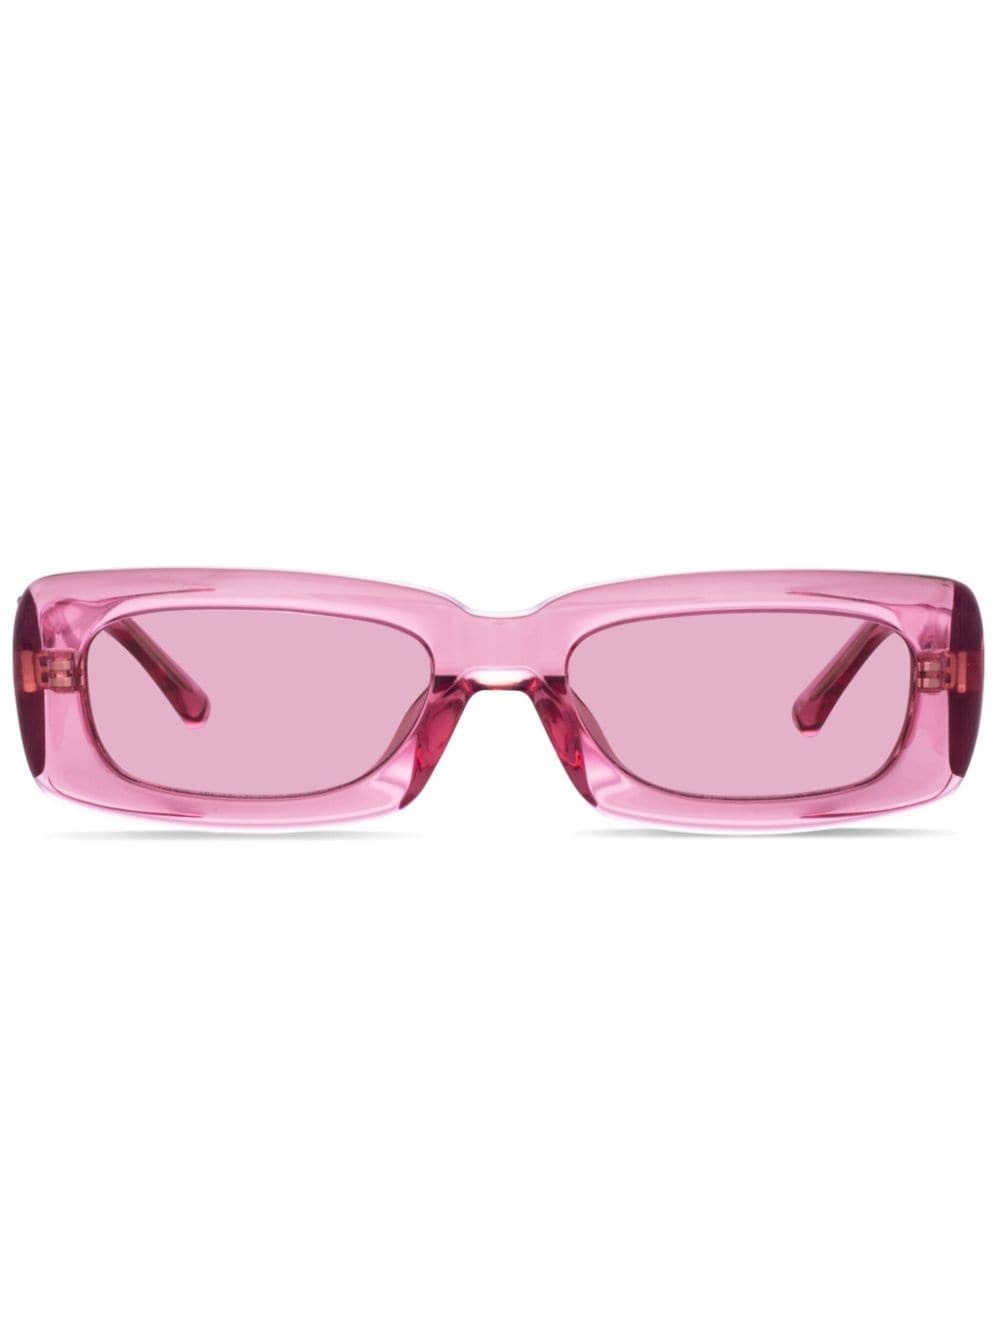 x Linda Farrow Marfa sunglasses - 1